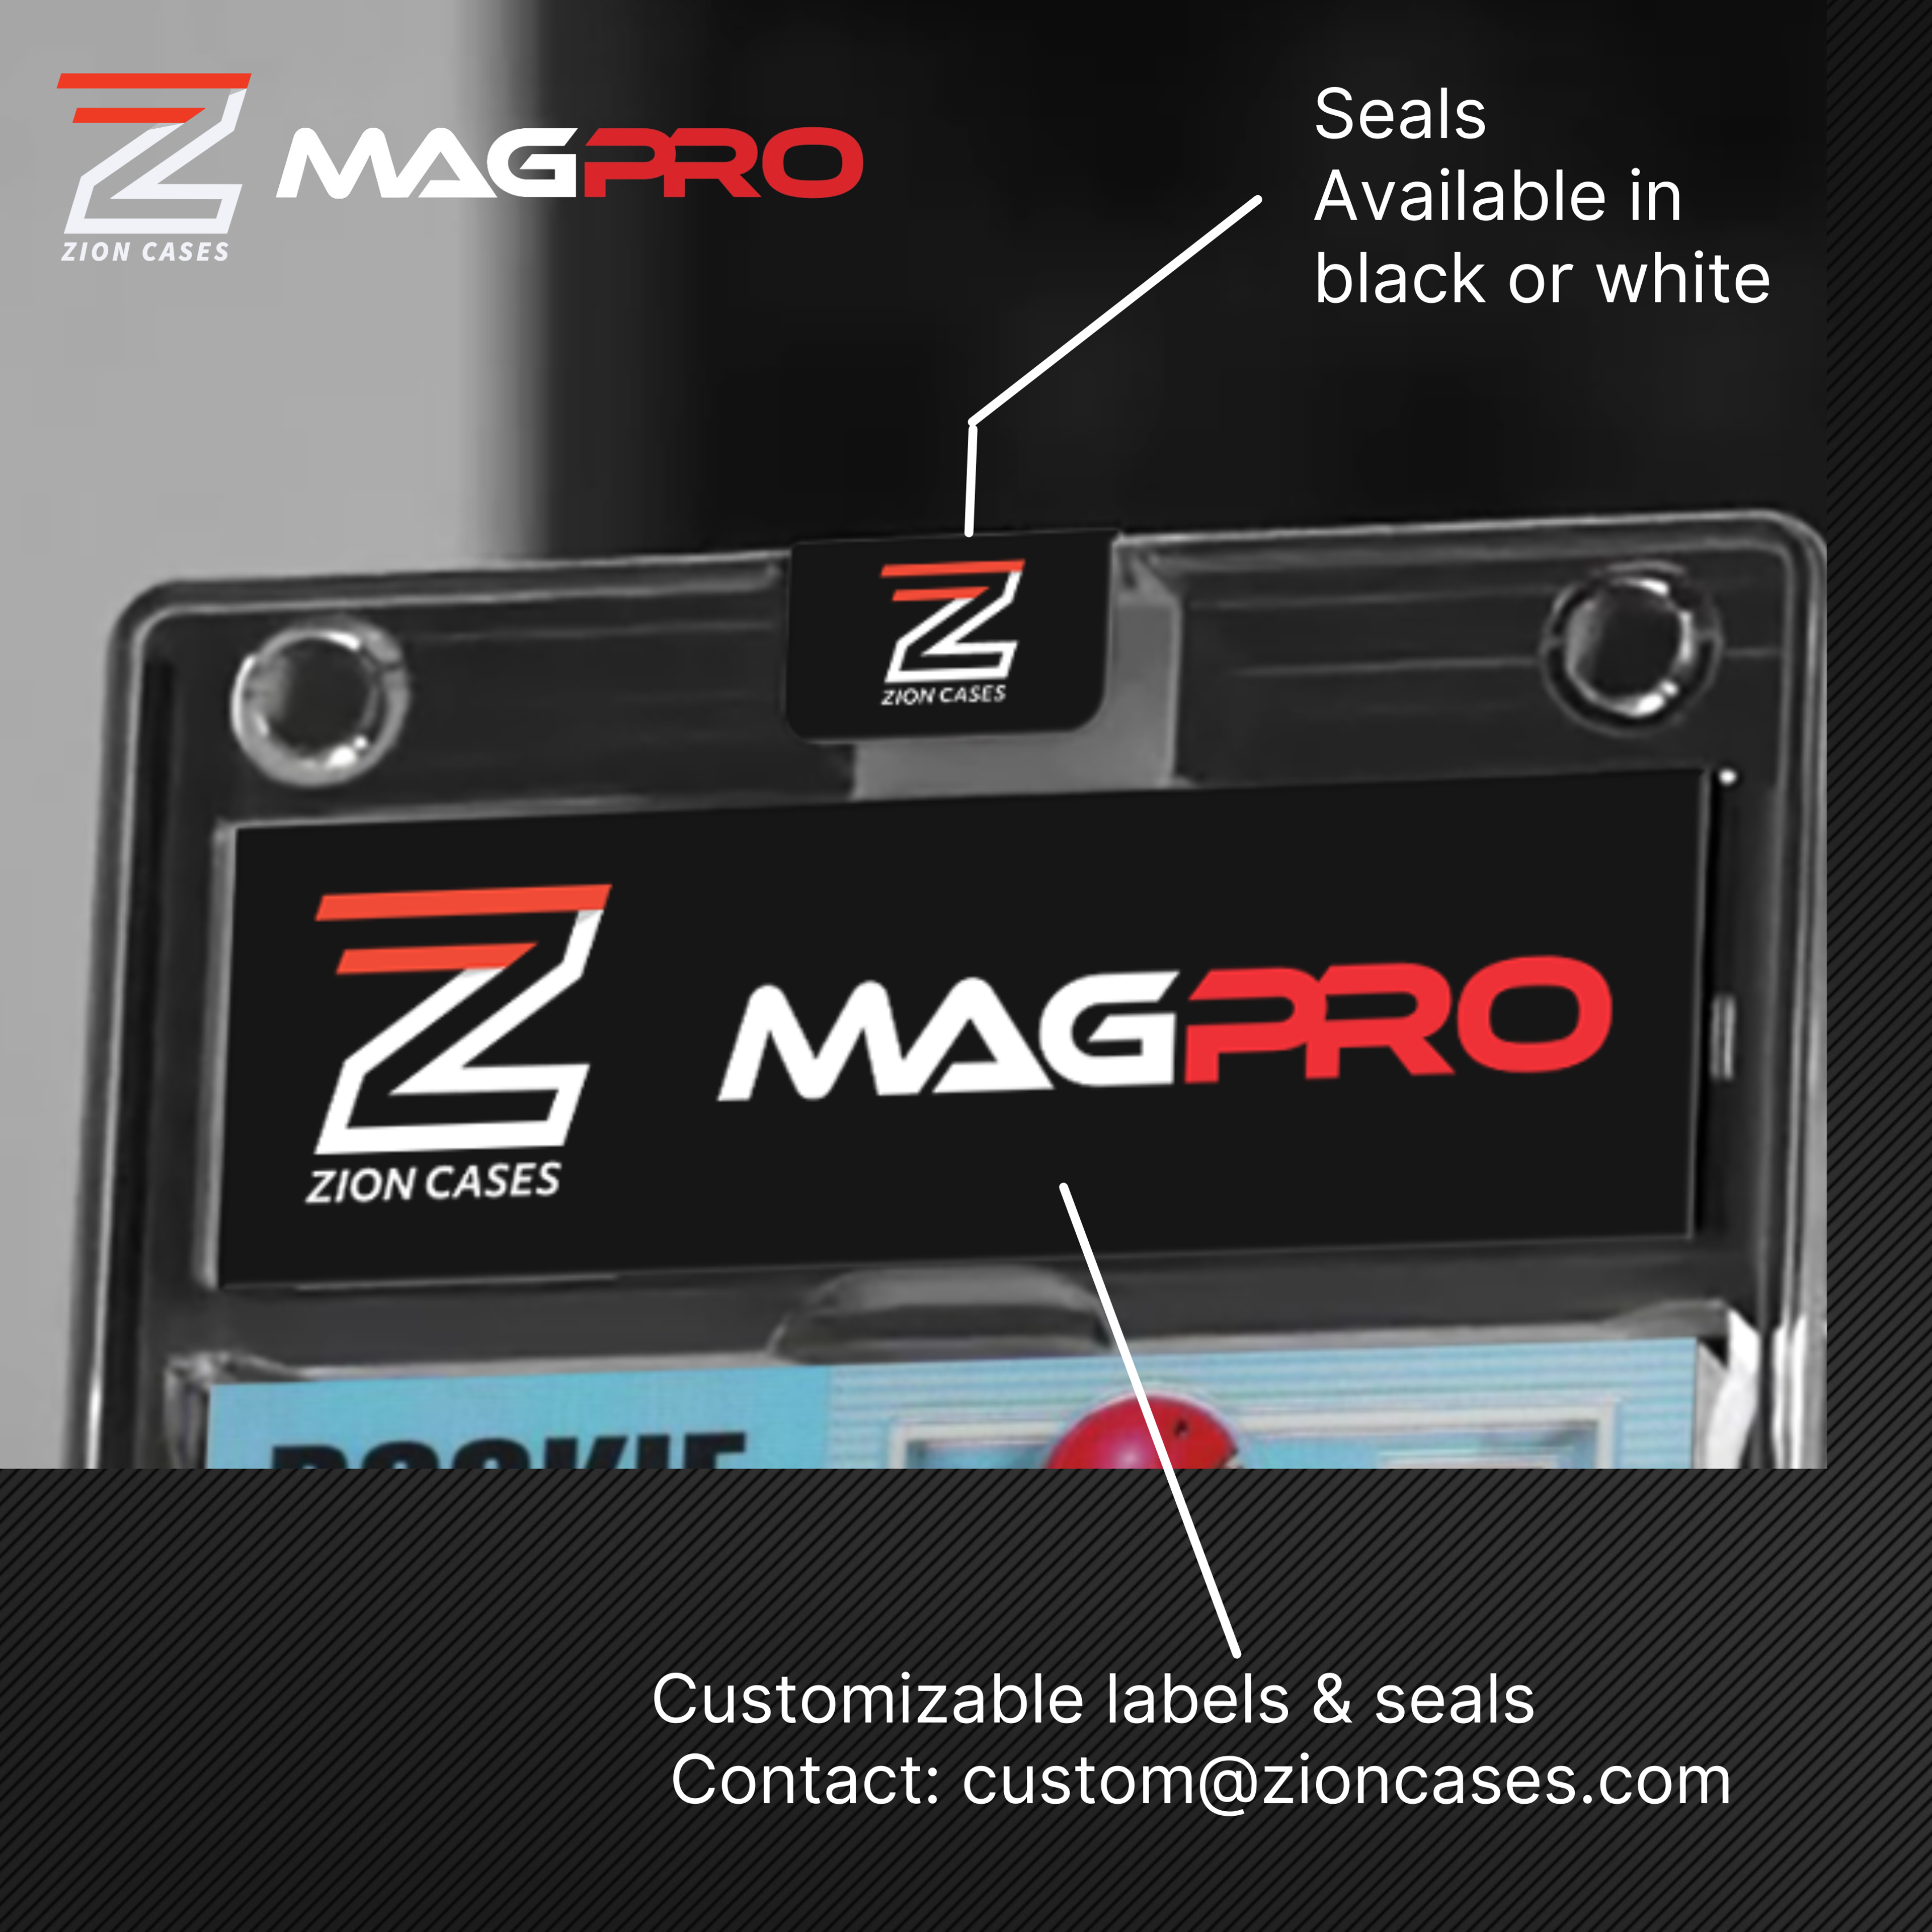 Alternate View 1 of test2 MagPro Card Seals Black